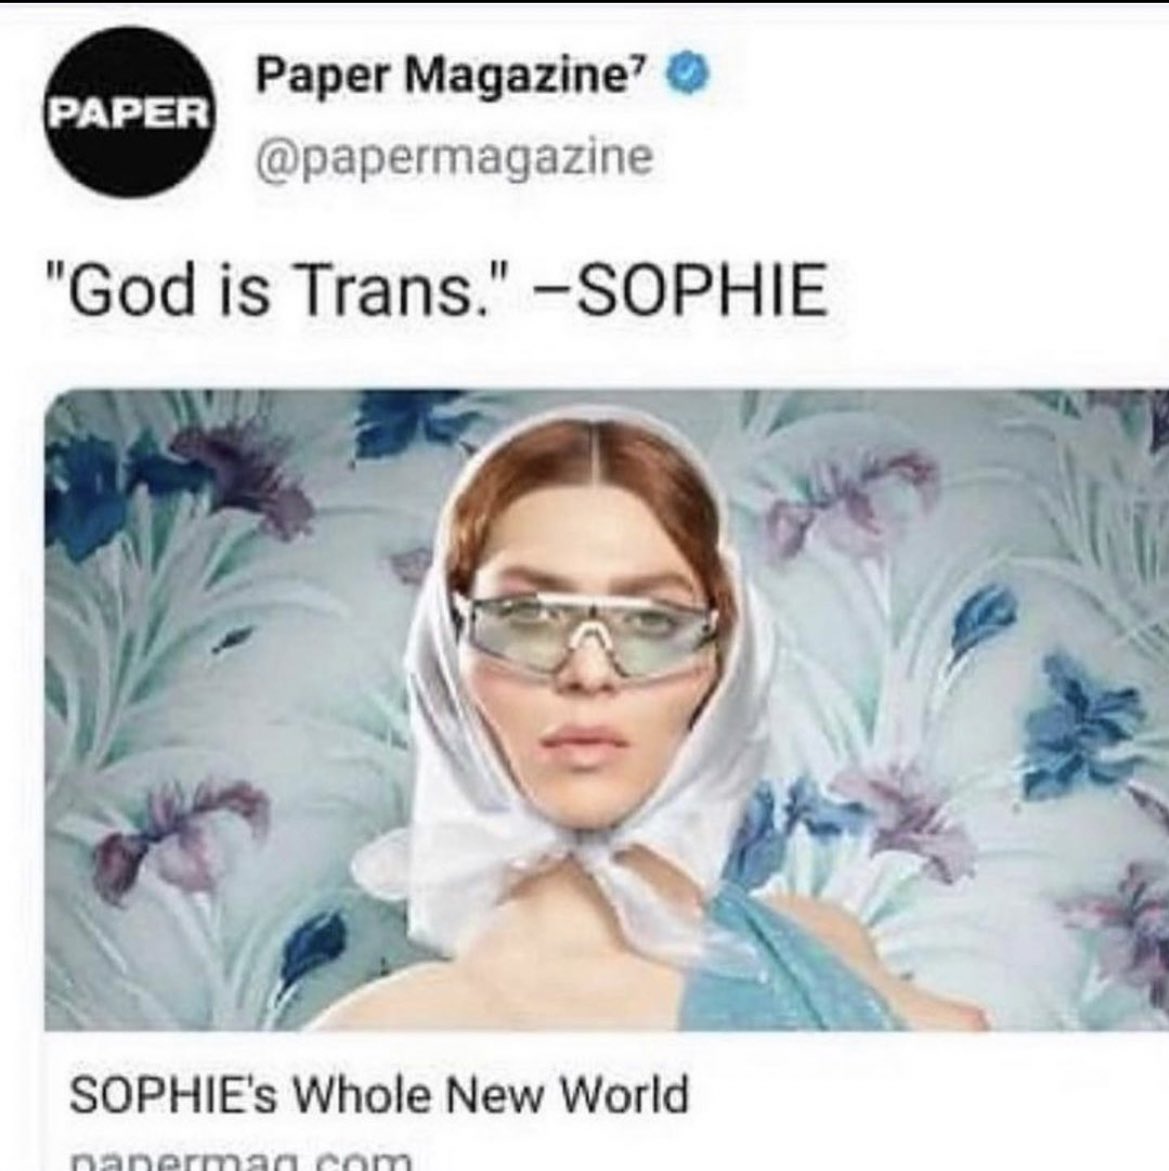 SOPHIE's Whole New World - PAPER Magazine